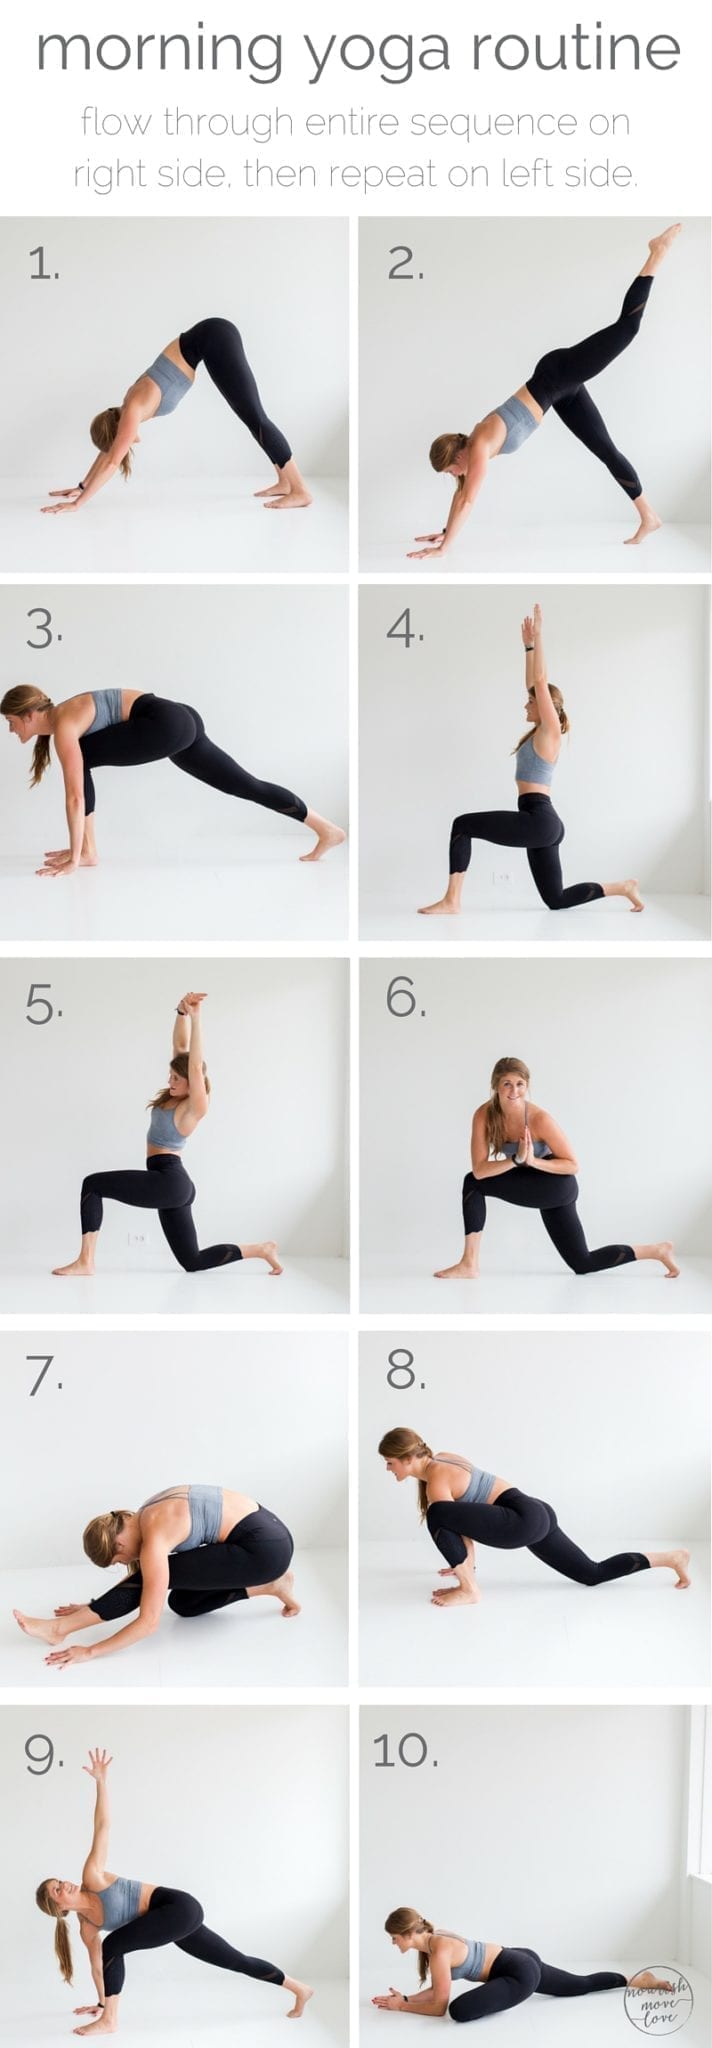 10 Basic Yoga Poses For Beginners